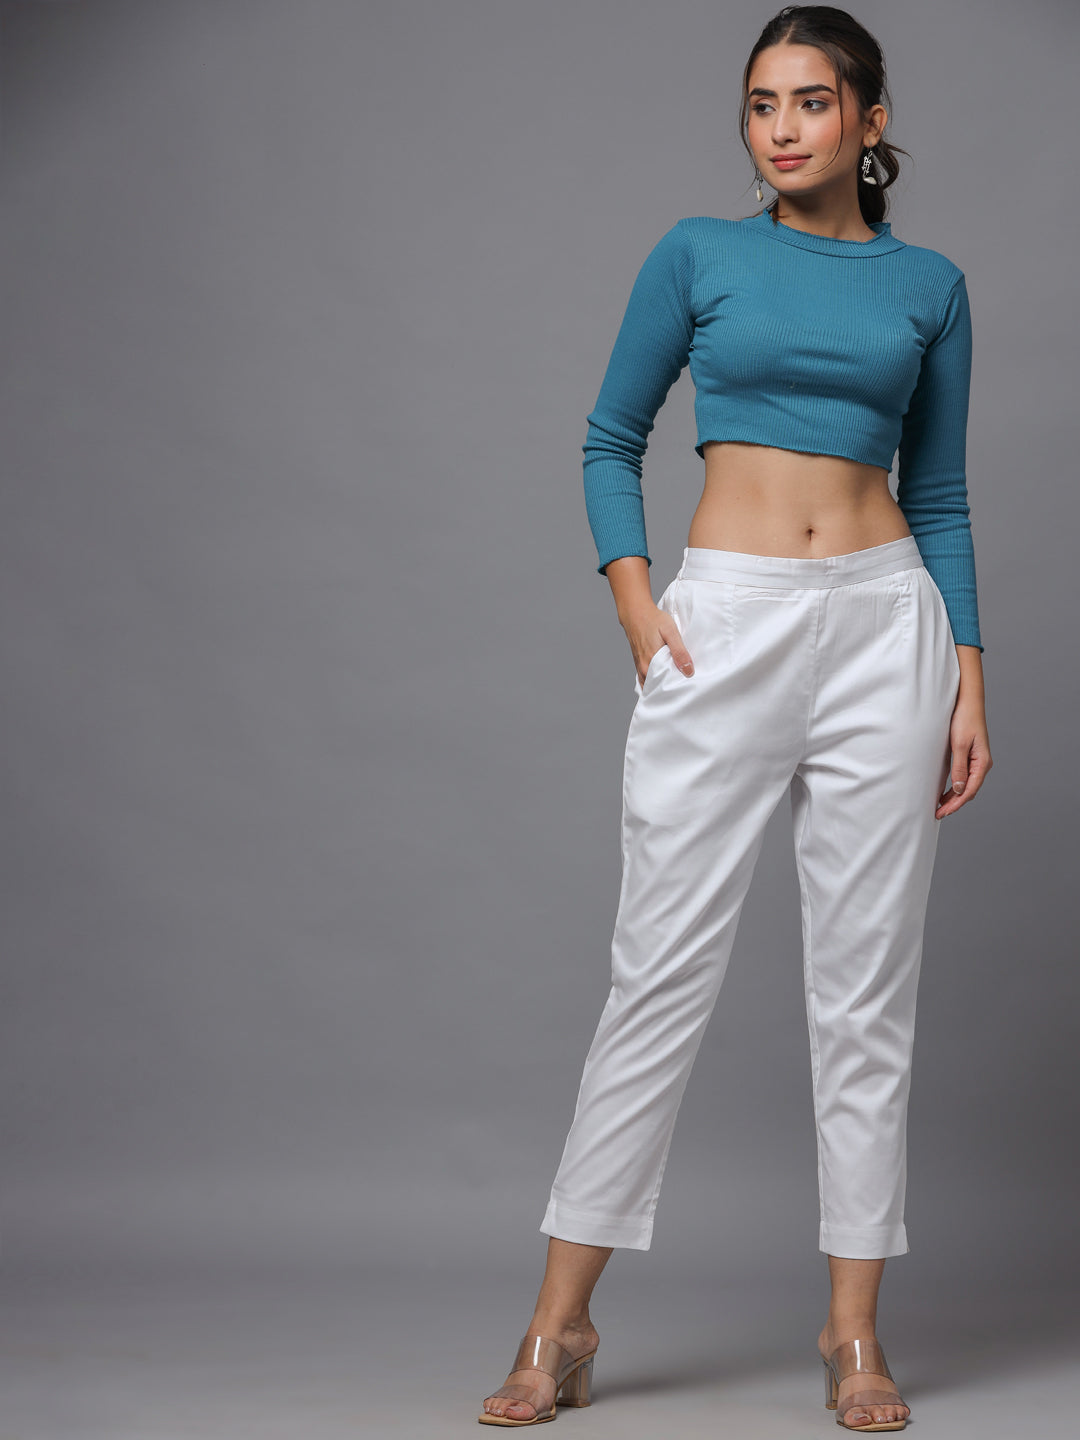 Juniper Women's White  Solid Straight Slim Pant